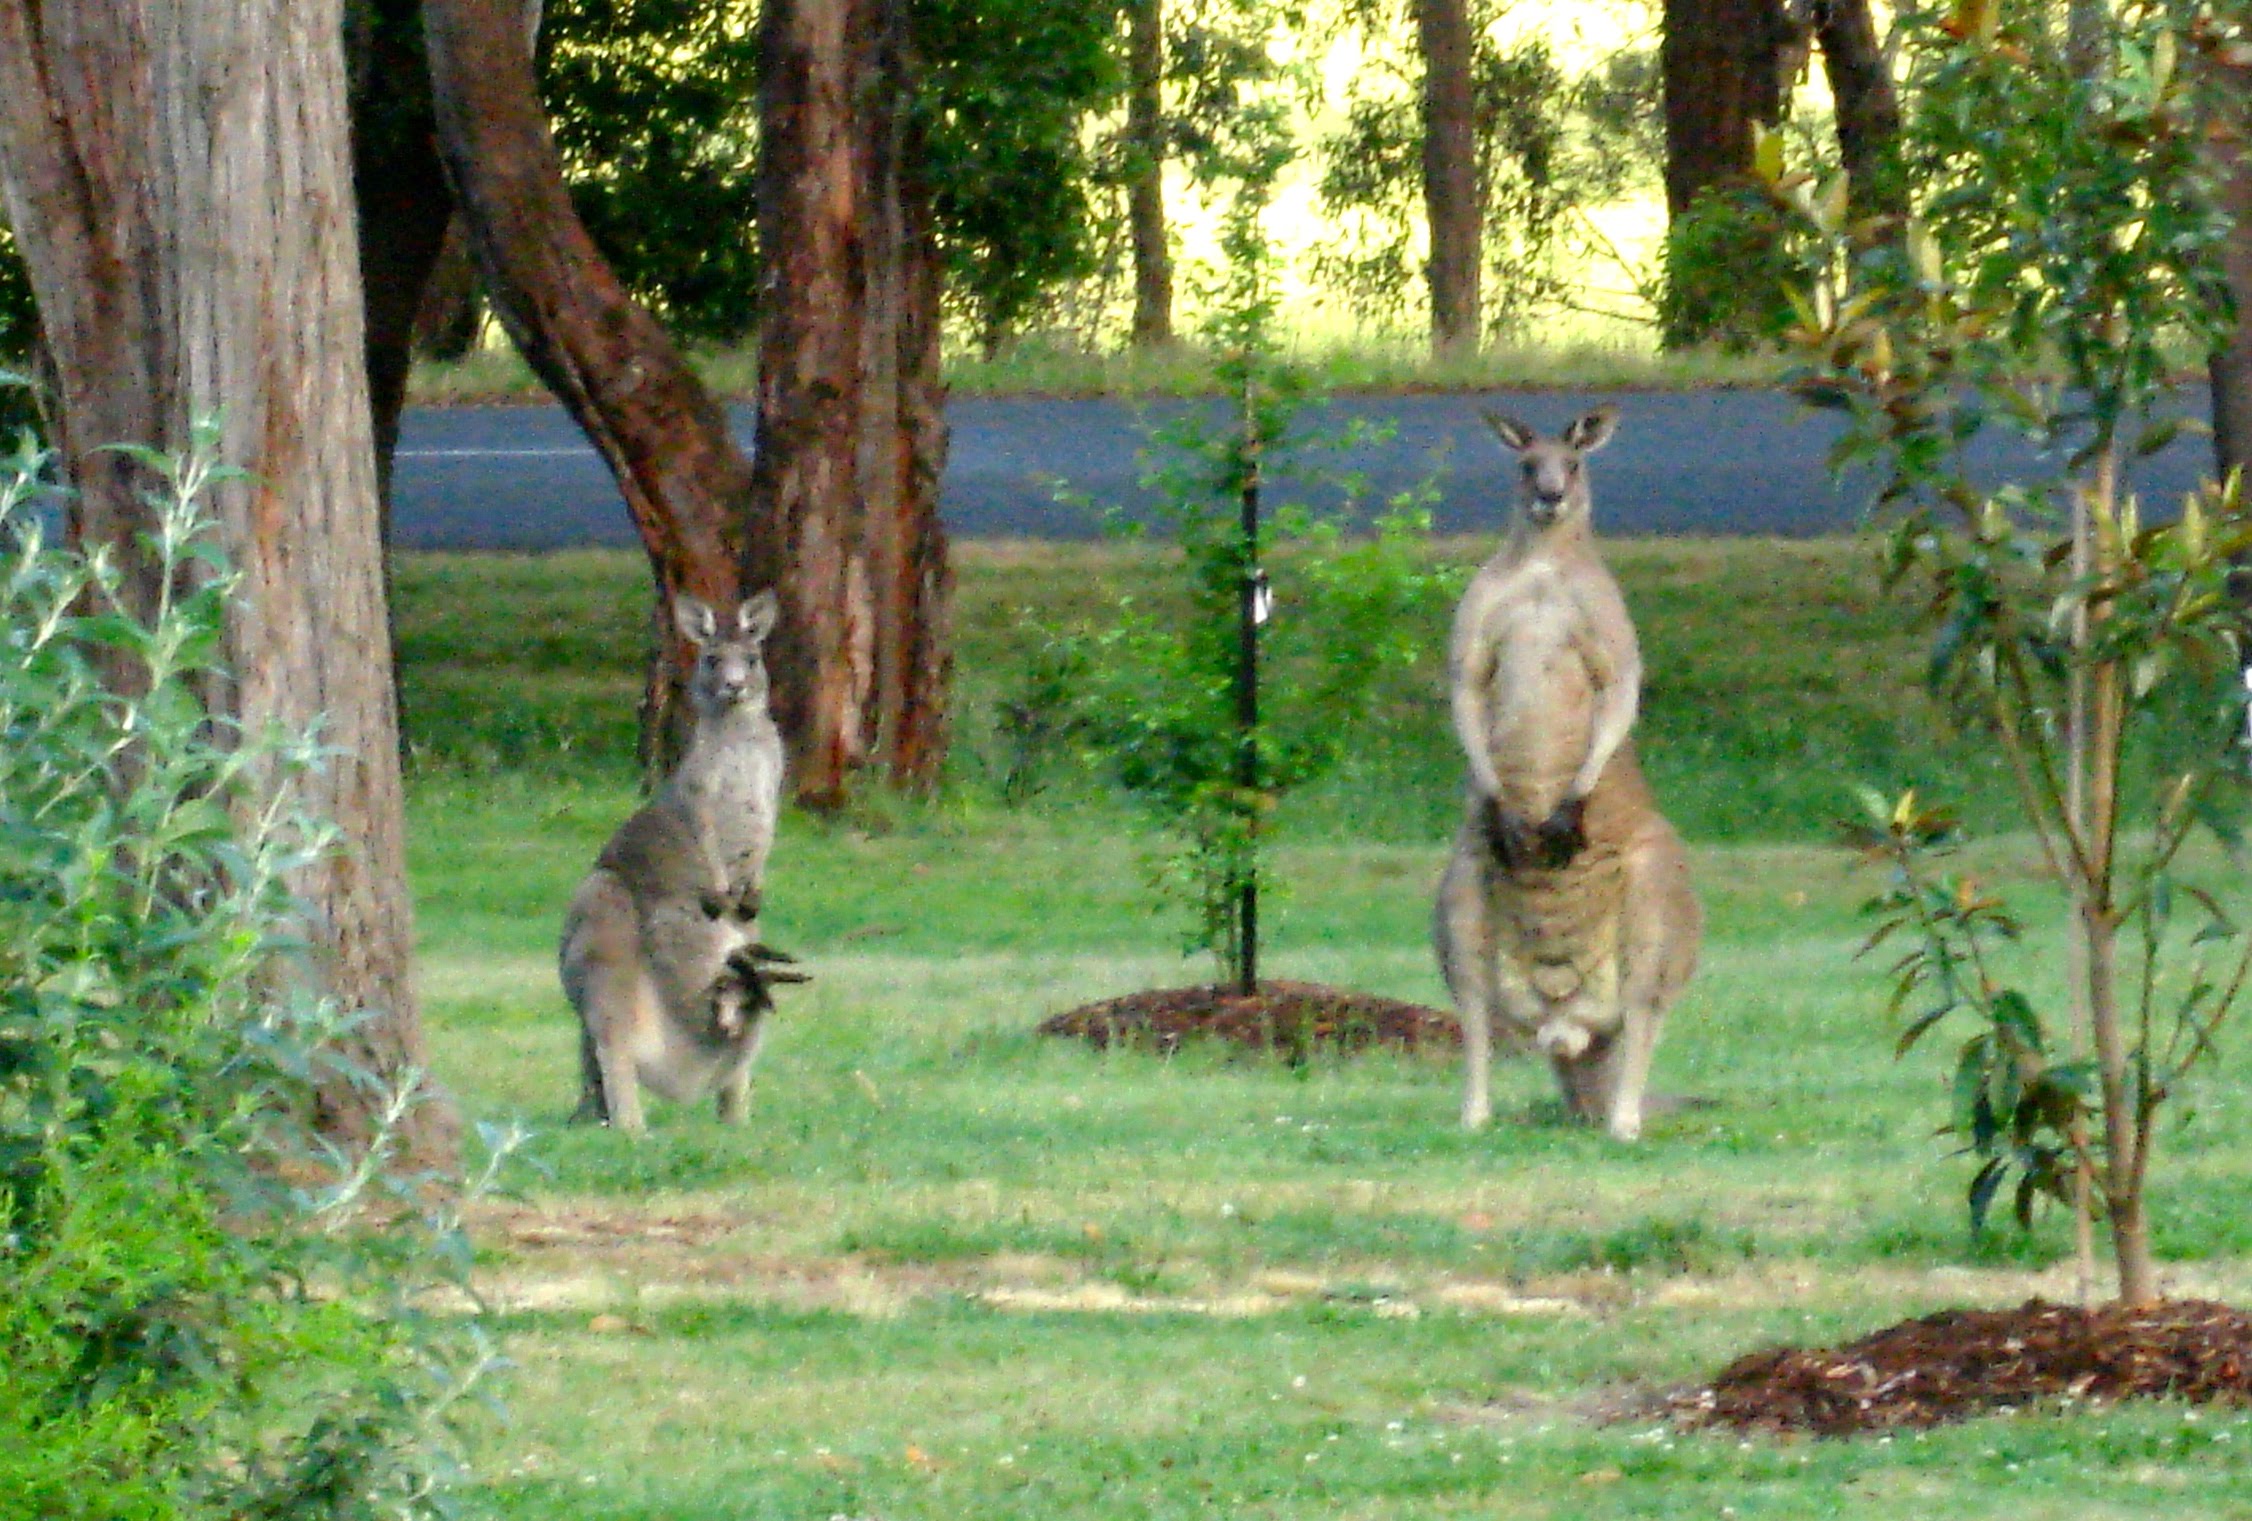 Wild kangaroos on my lawn! - YouTube